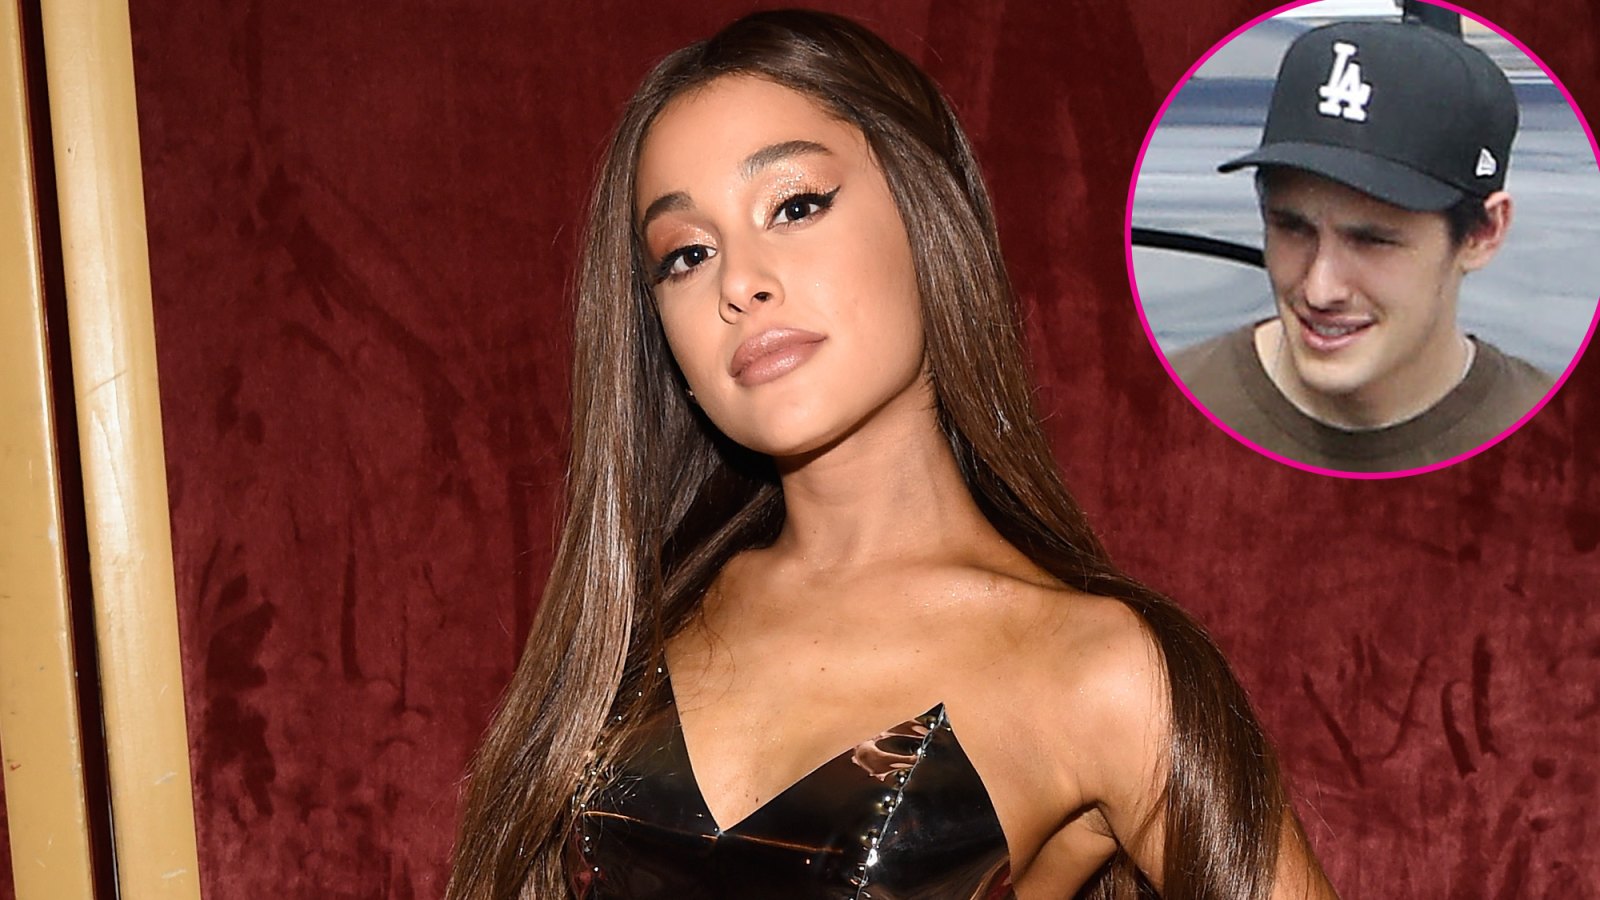 Ariana Grande and Dalton Gomez Had ‘Disputes’ Over Prenup Before Finalizing Divorce Settlement